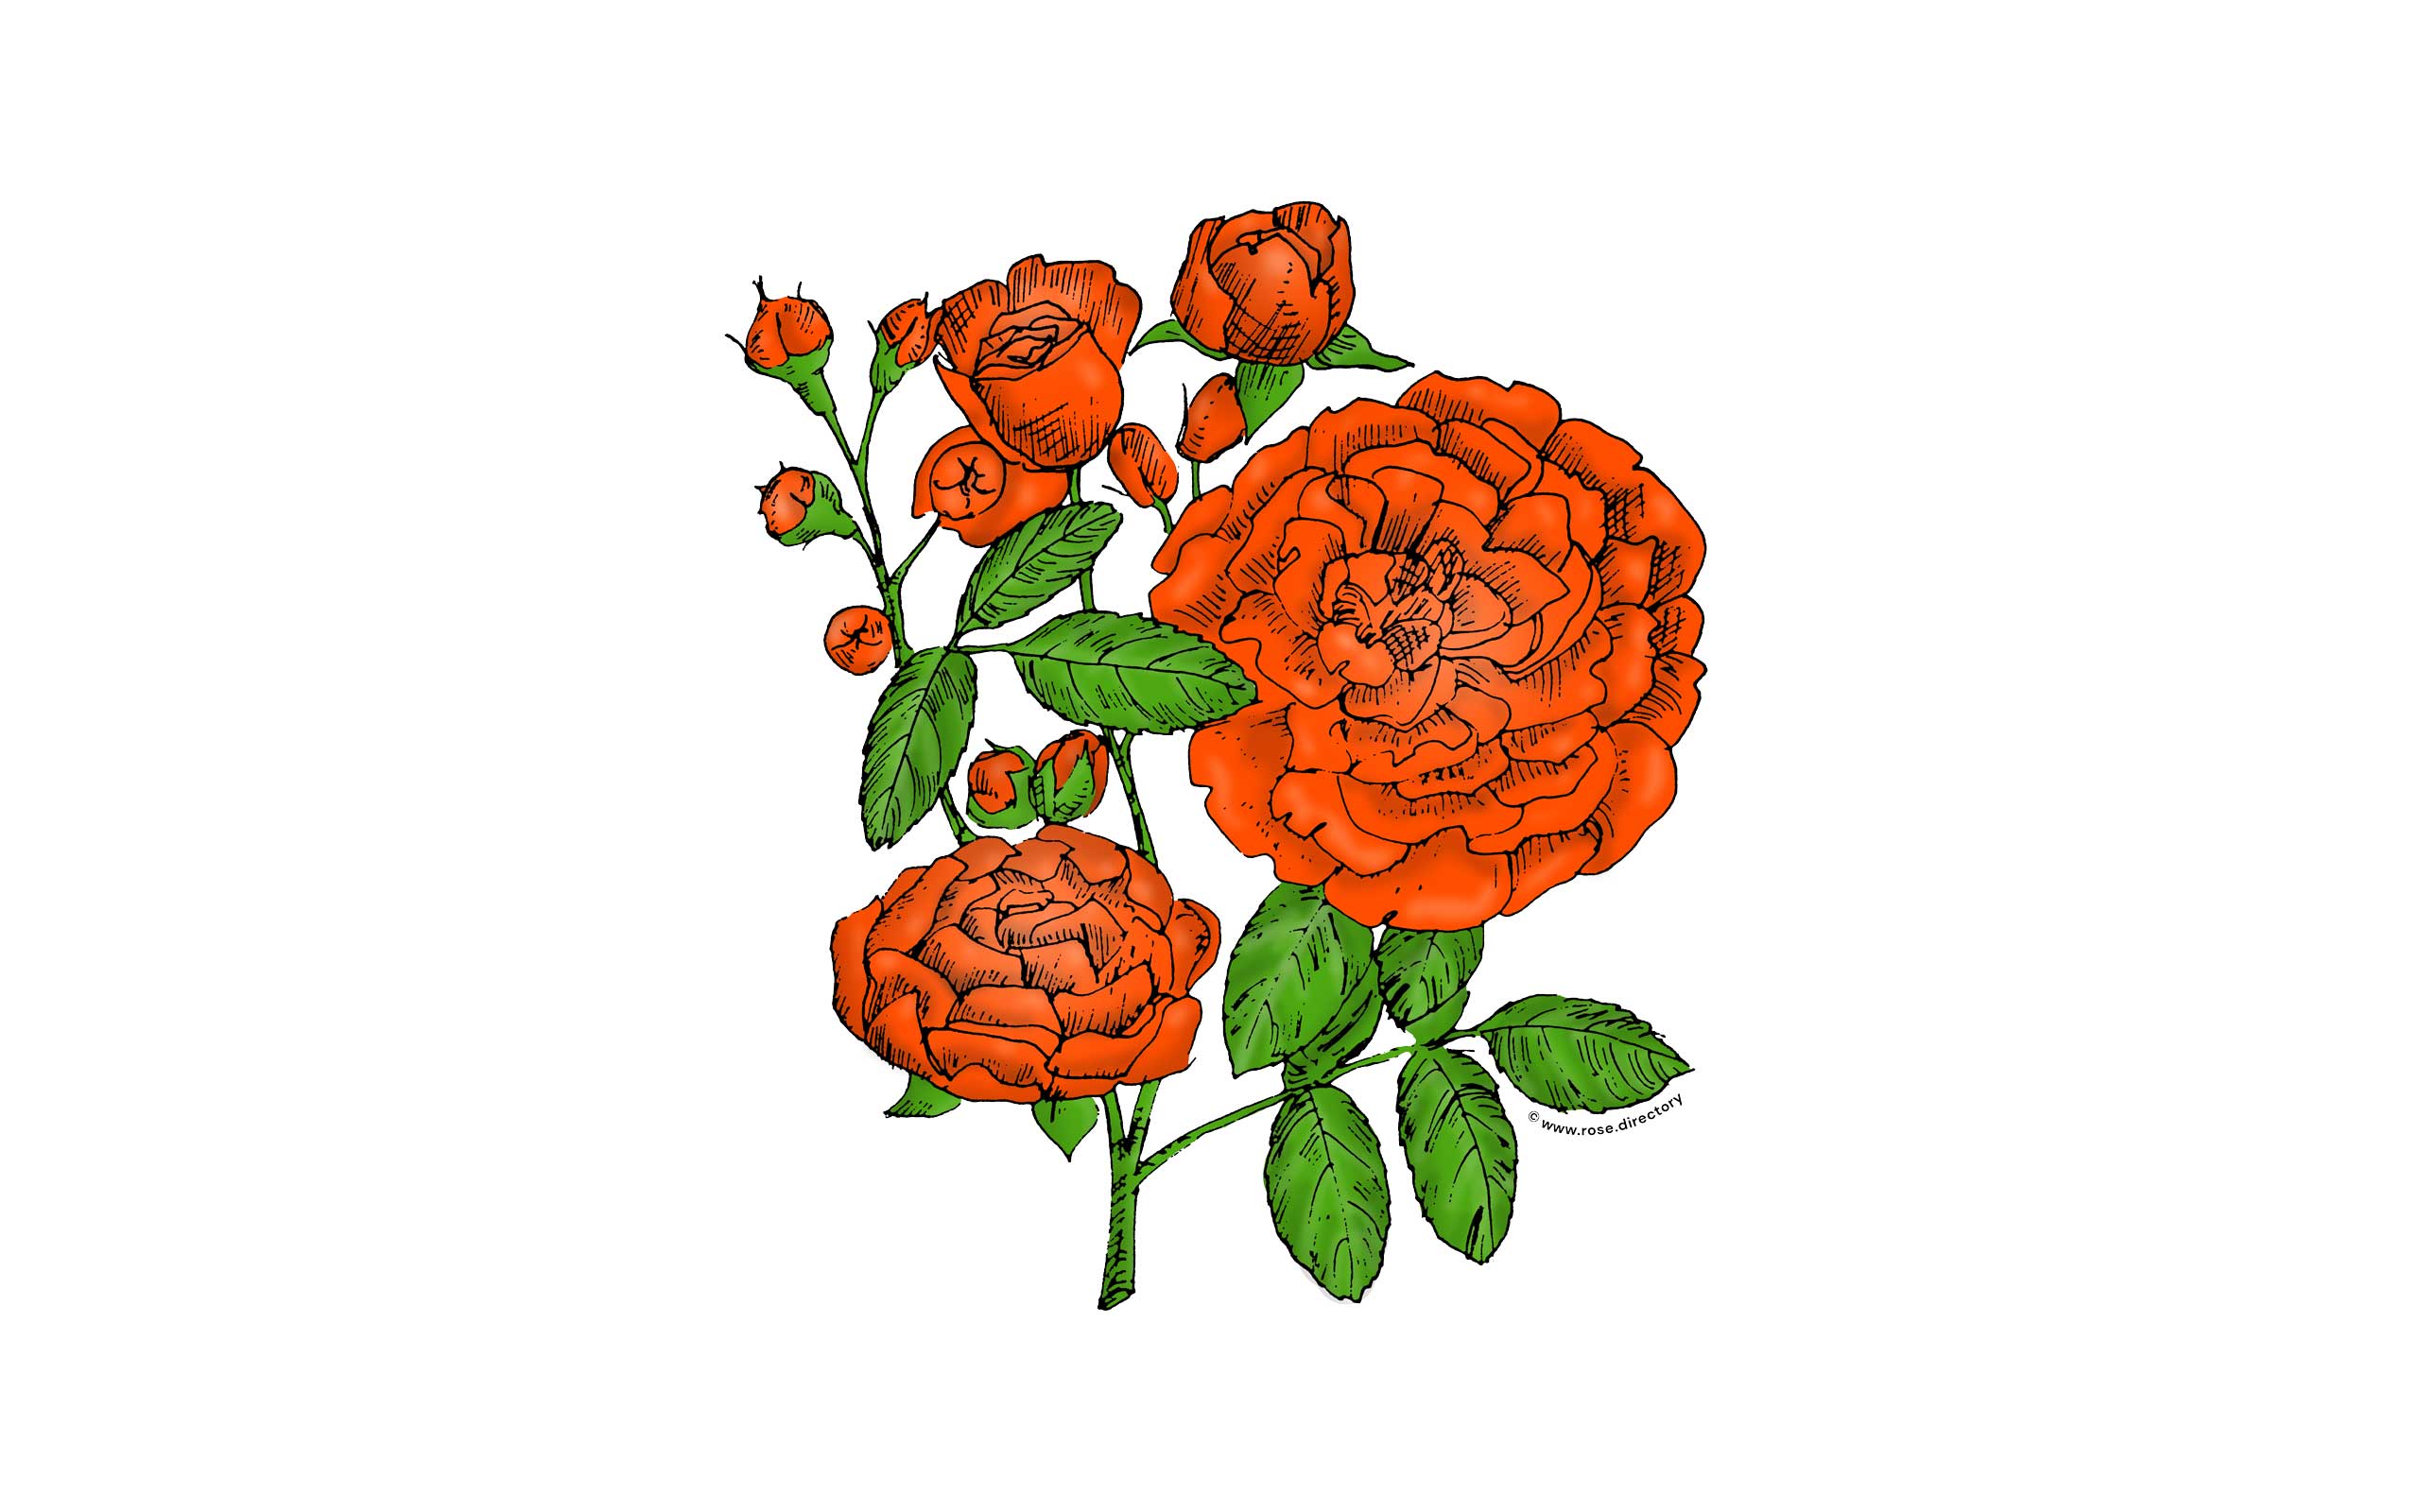 Orange Rosette Rose Bloom Full 26-40 Petals In 3+ Rows